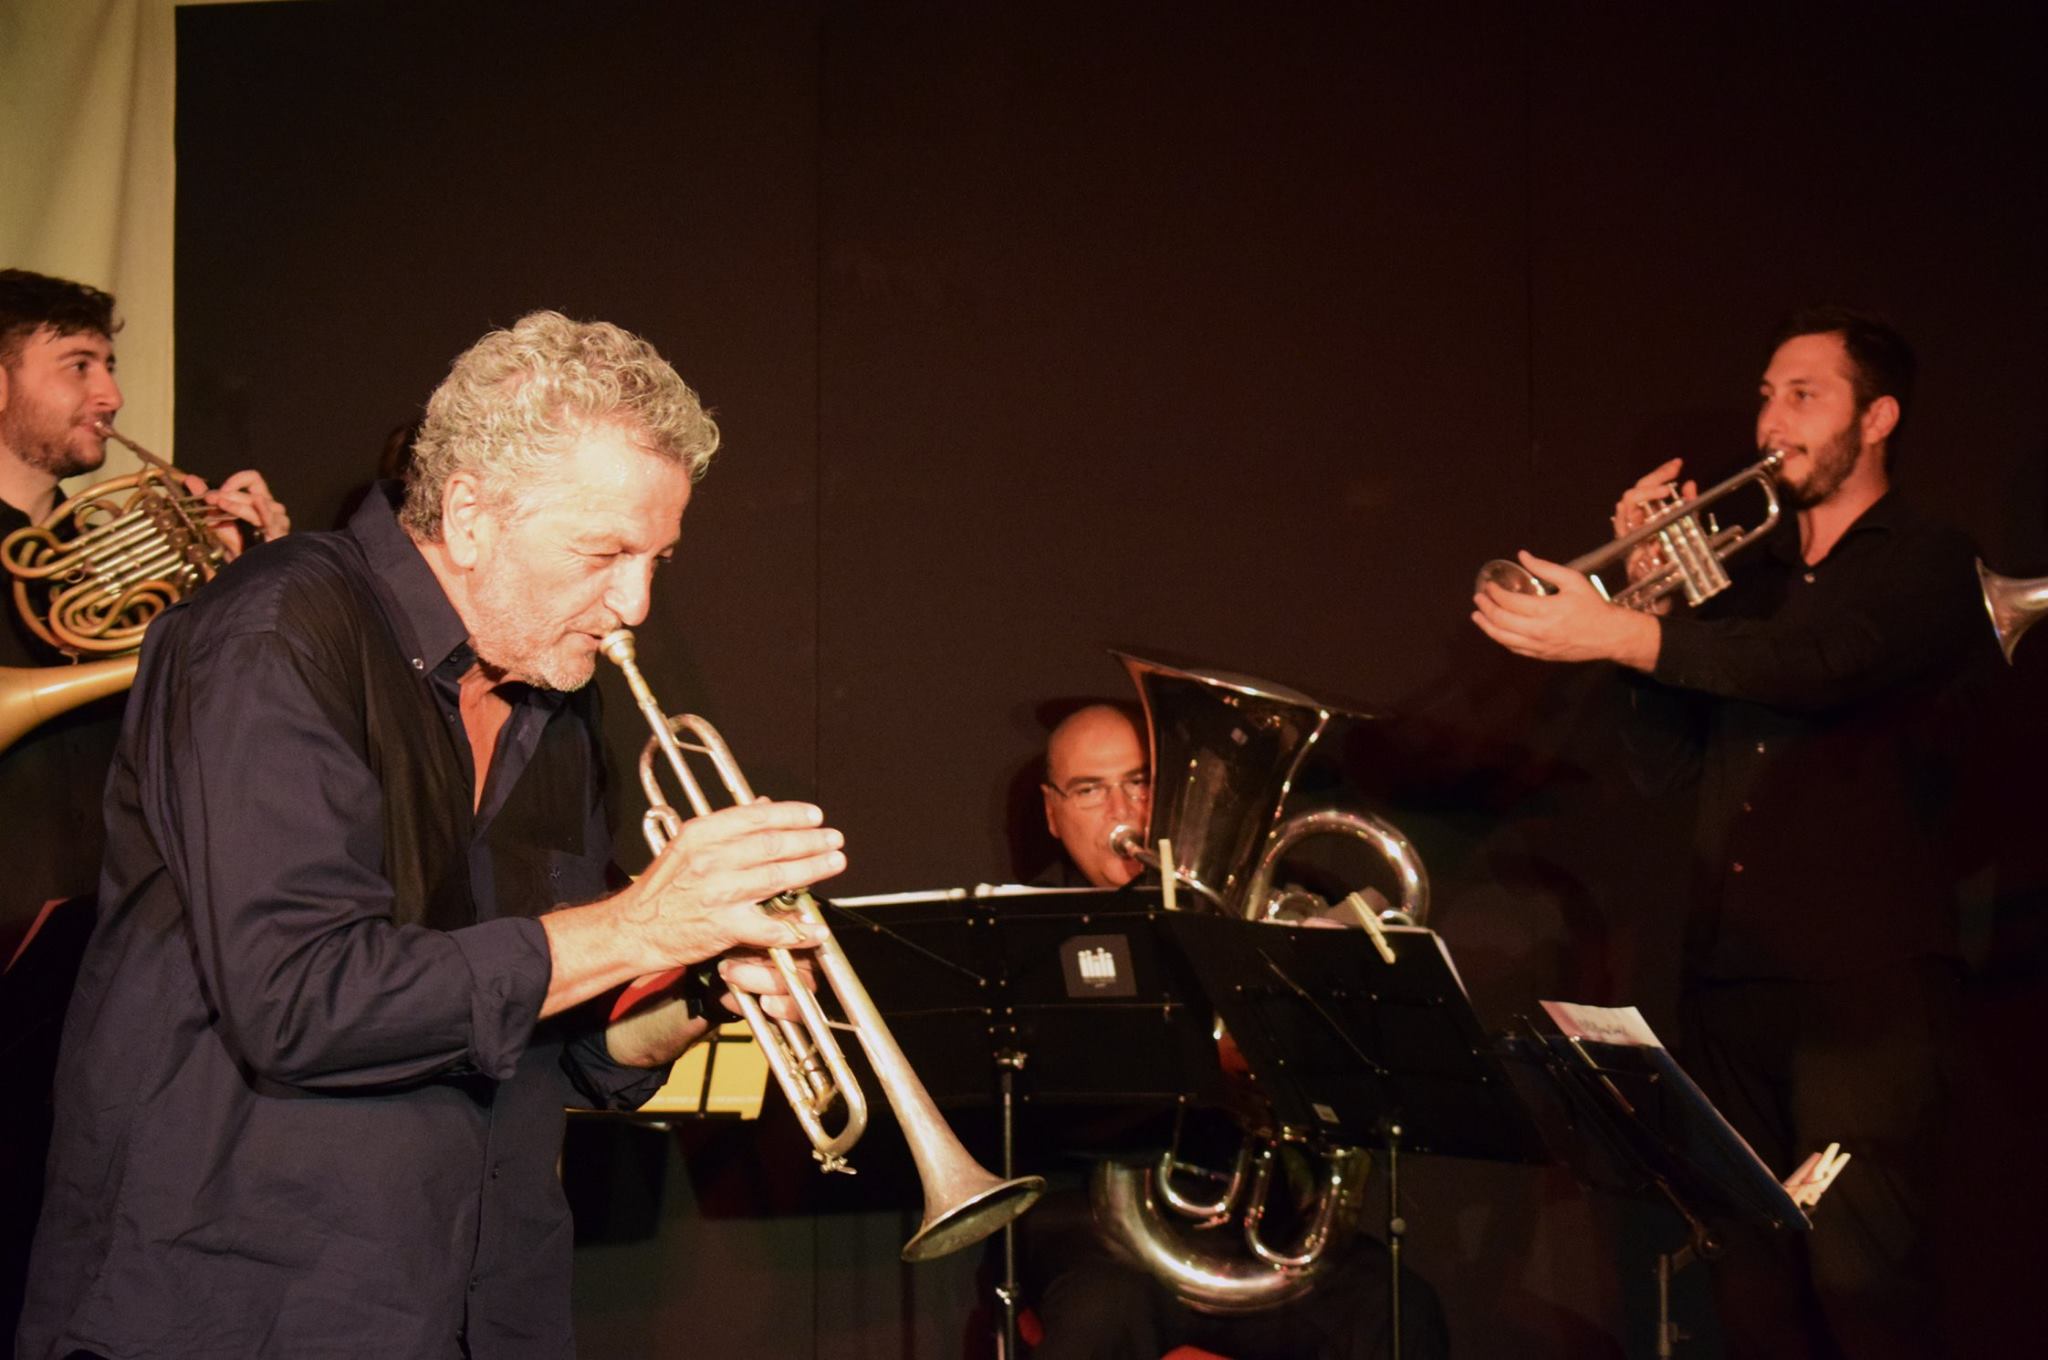 The Billi Brass Quintett